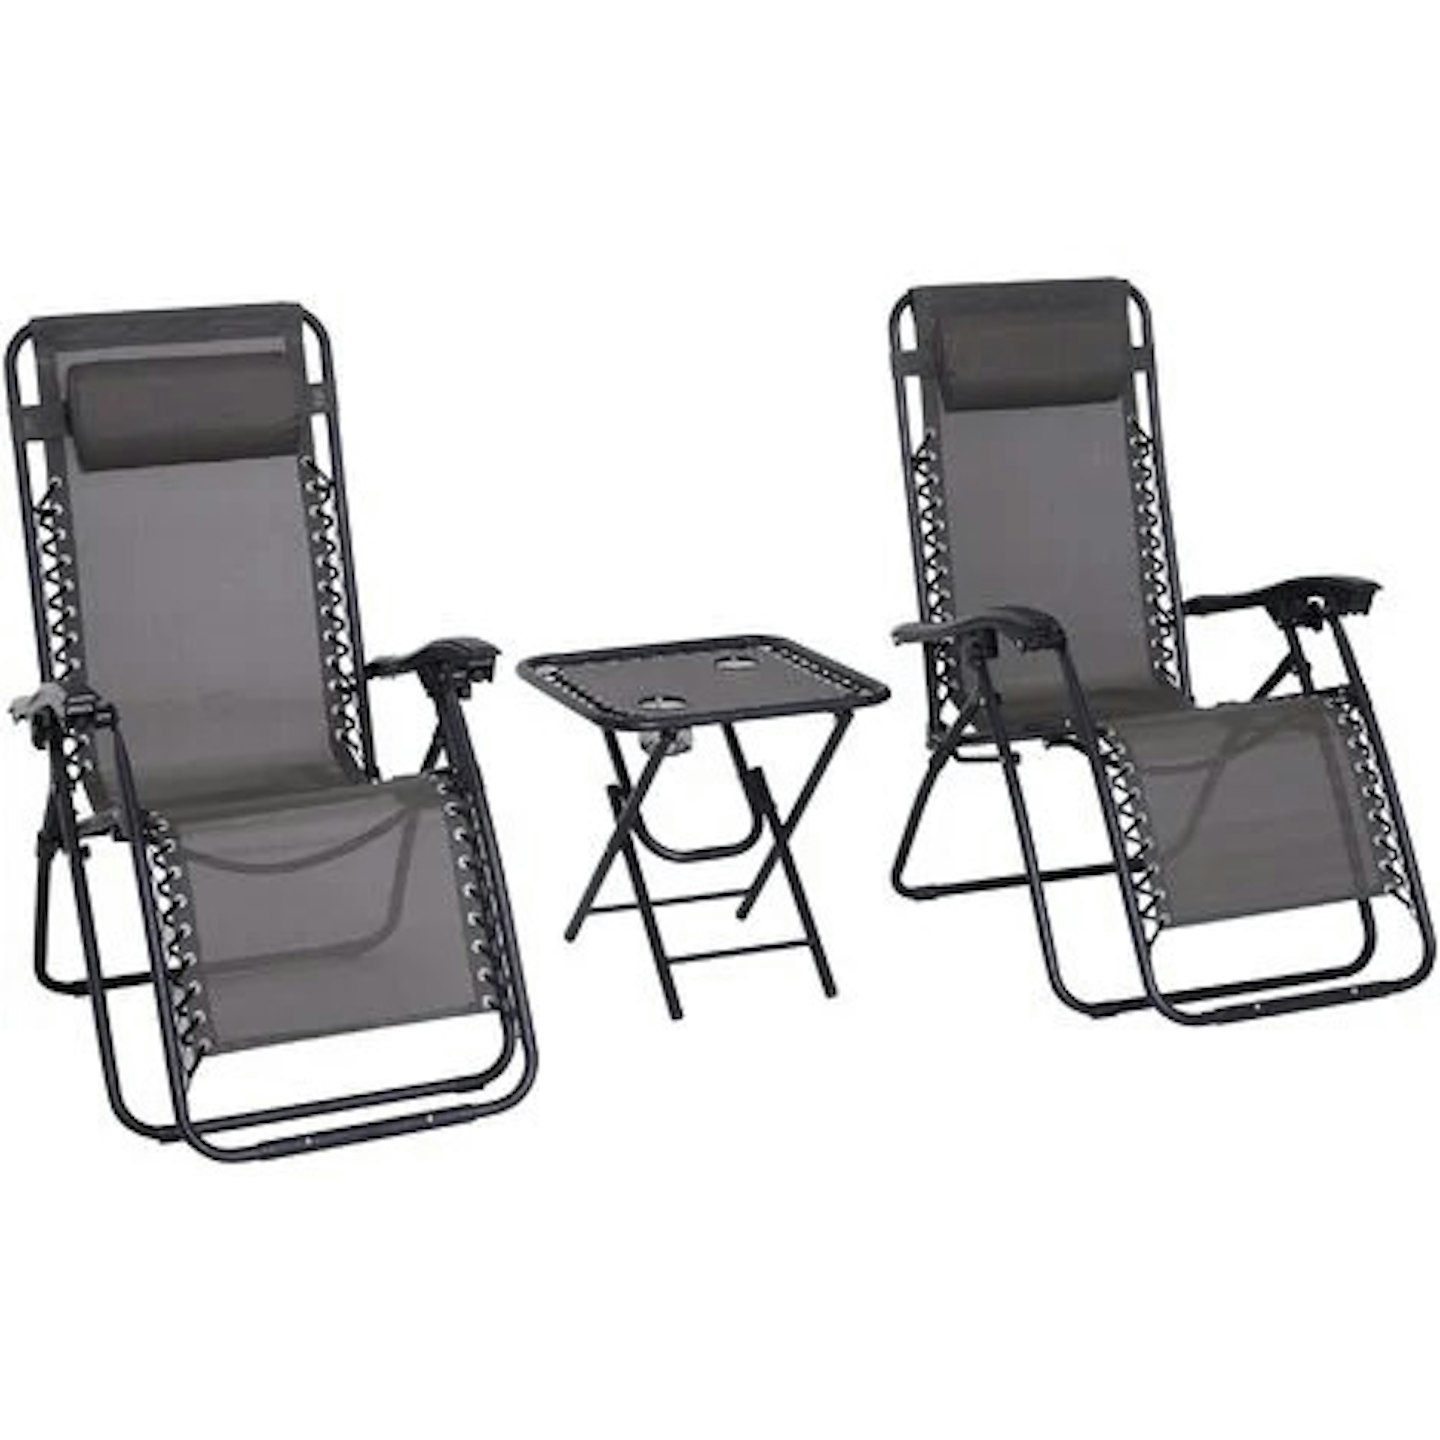 Outsunny 3PC Zero Gravity Chairs Sun Lounger Table Set